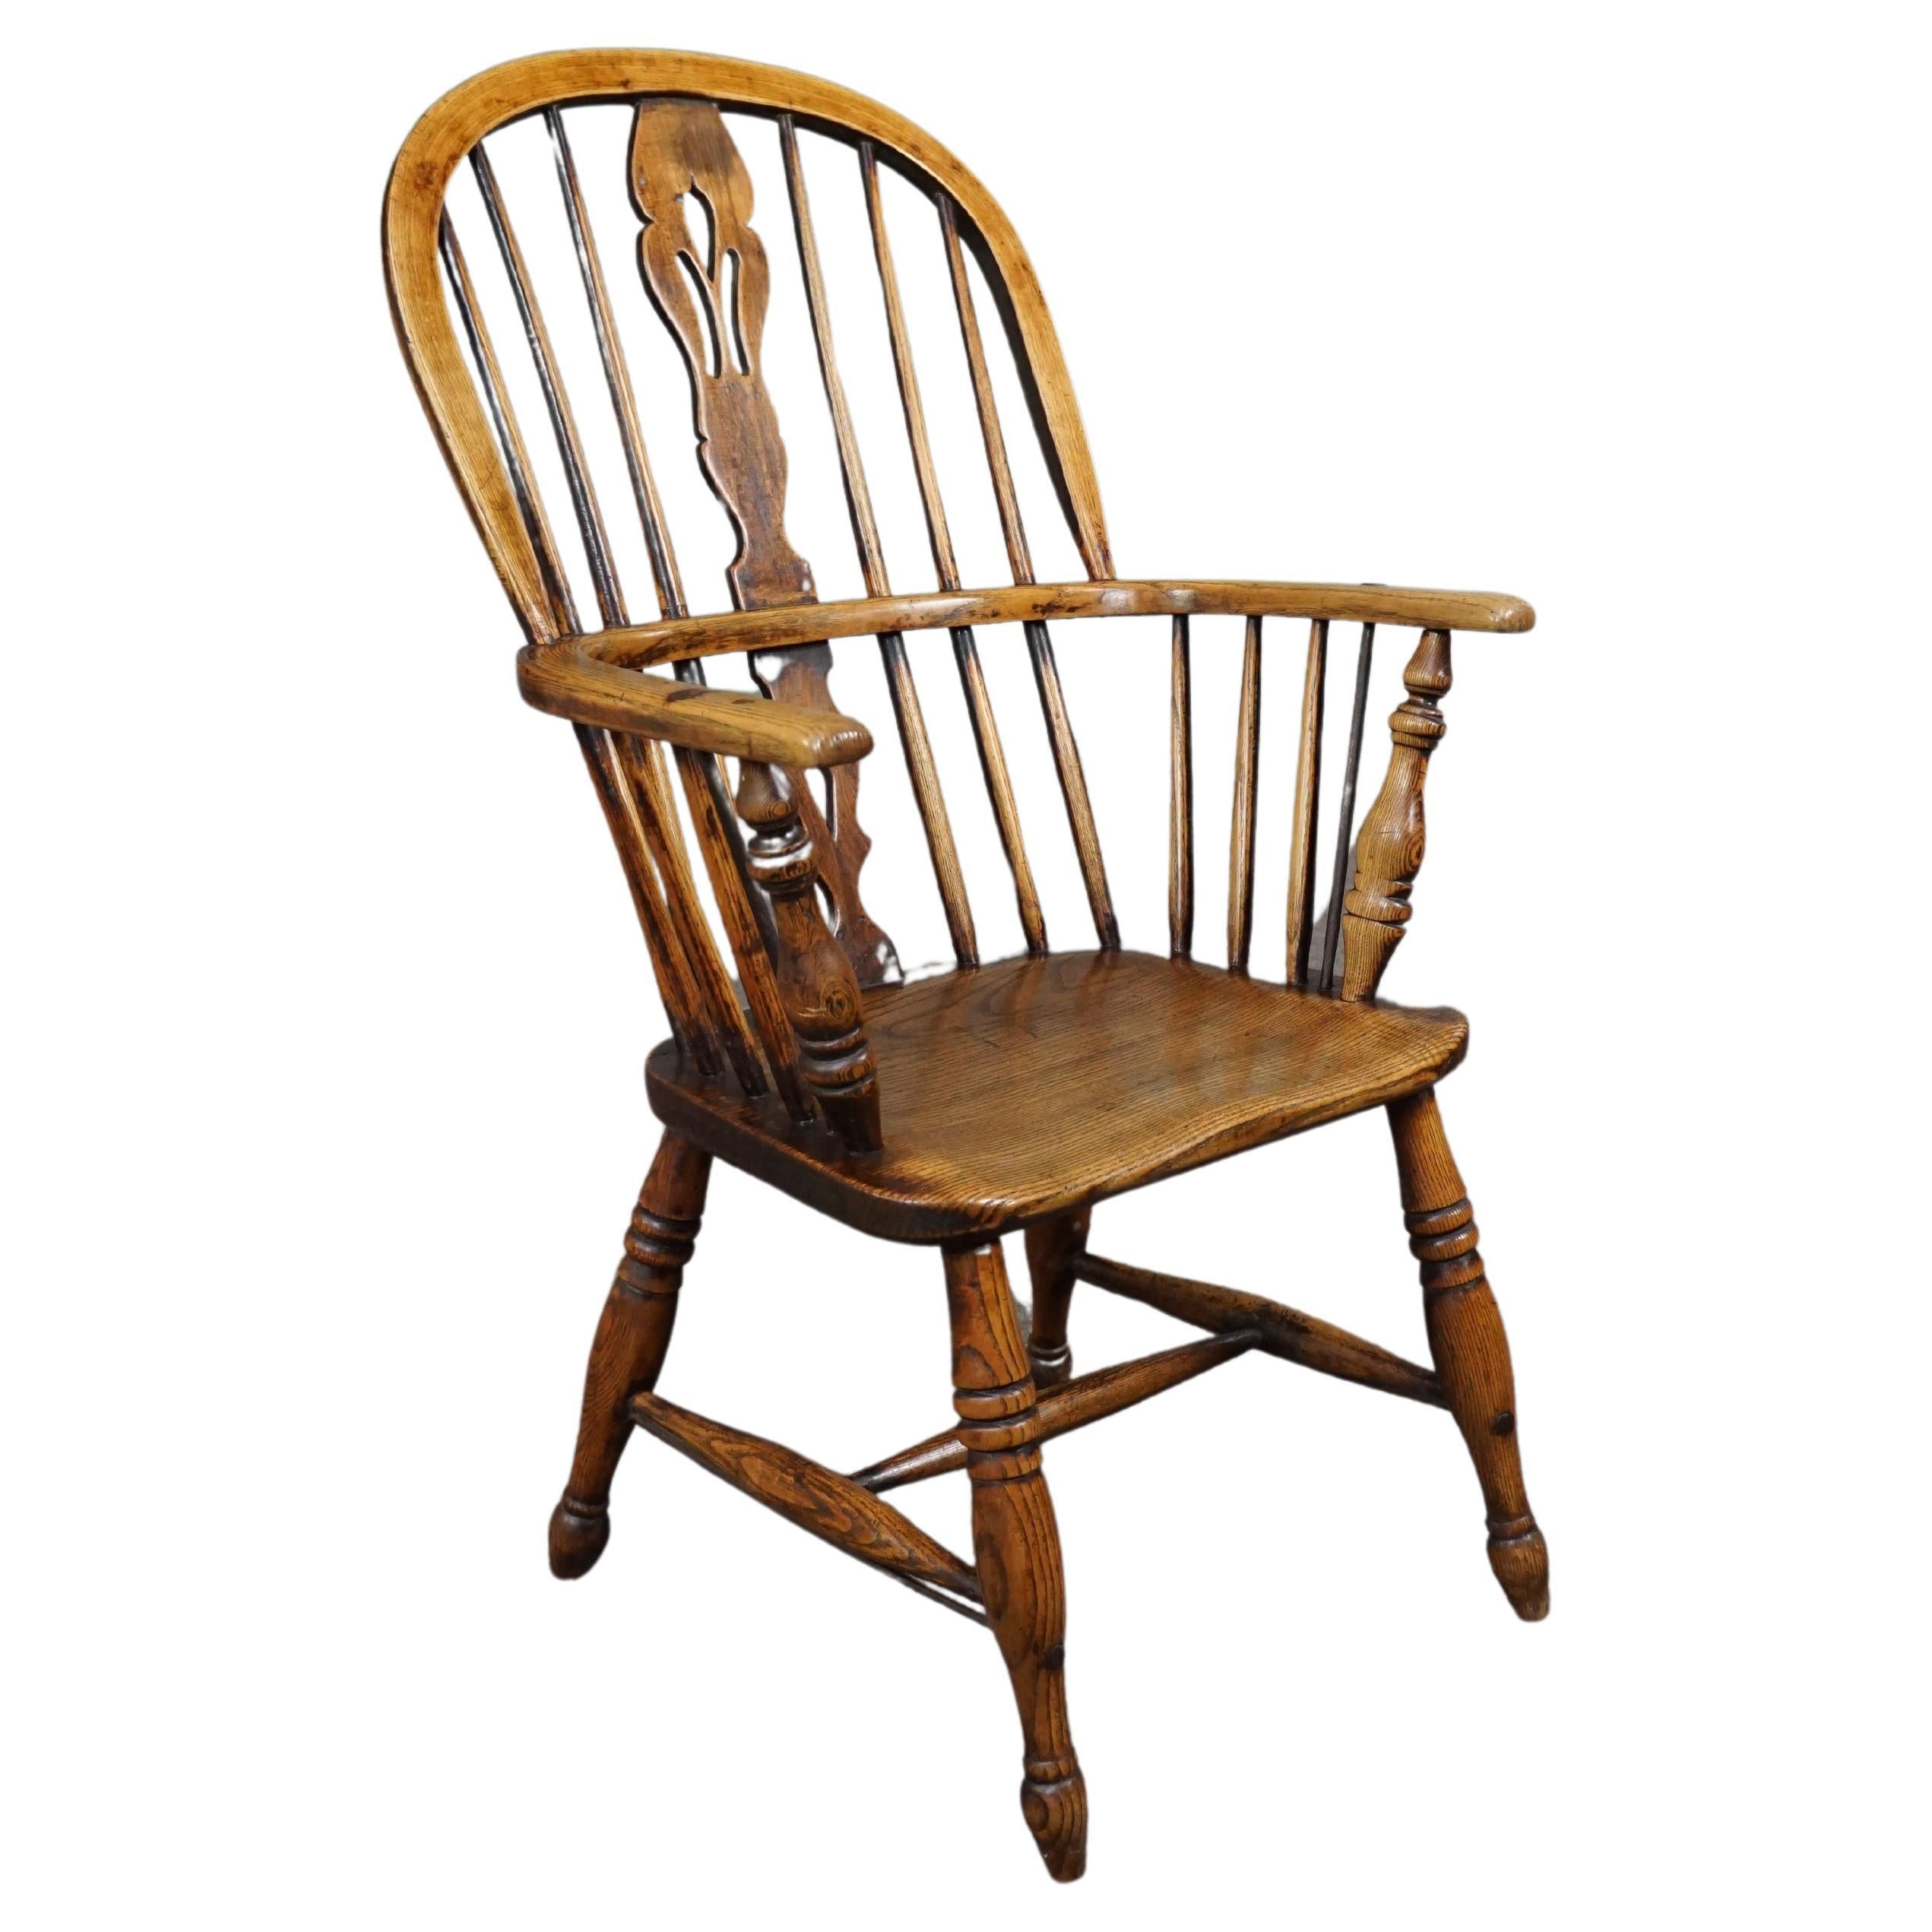 Fauteuil/chaise Windsor anglais à haut dossier, XVIIIe siècle